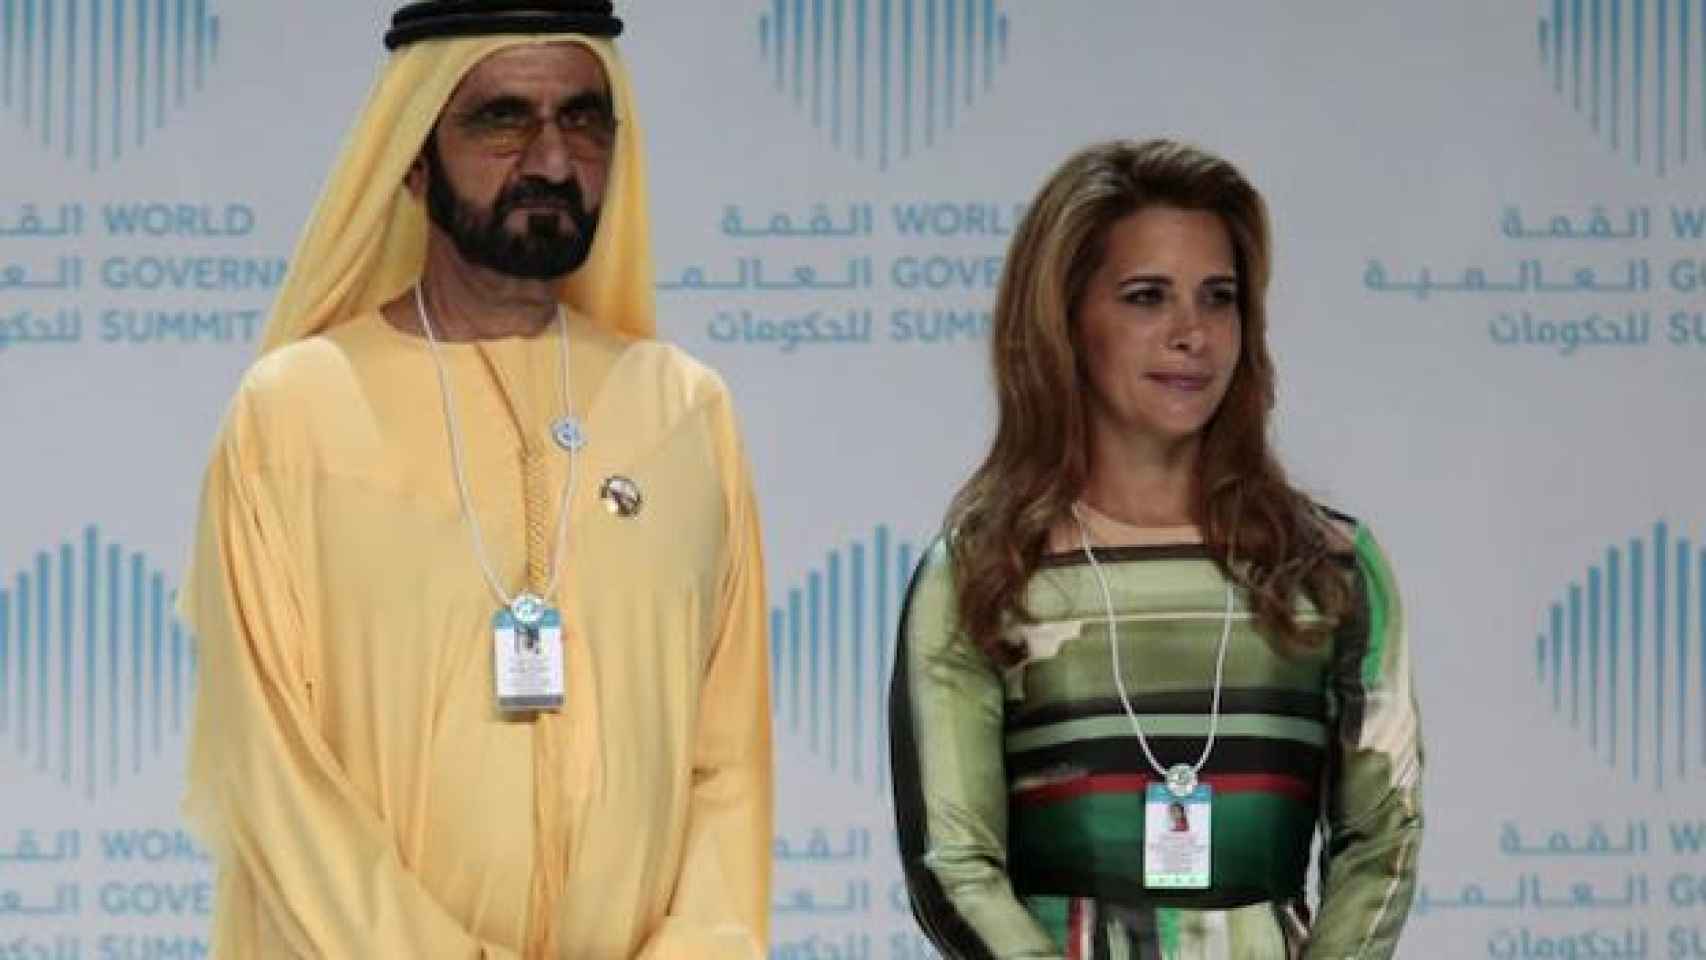 Mohammed Bin Rashid junto a Haya bint Al Hussein.